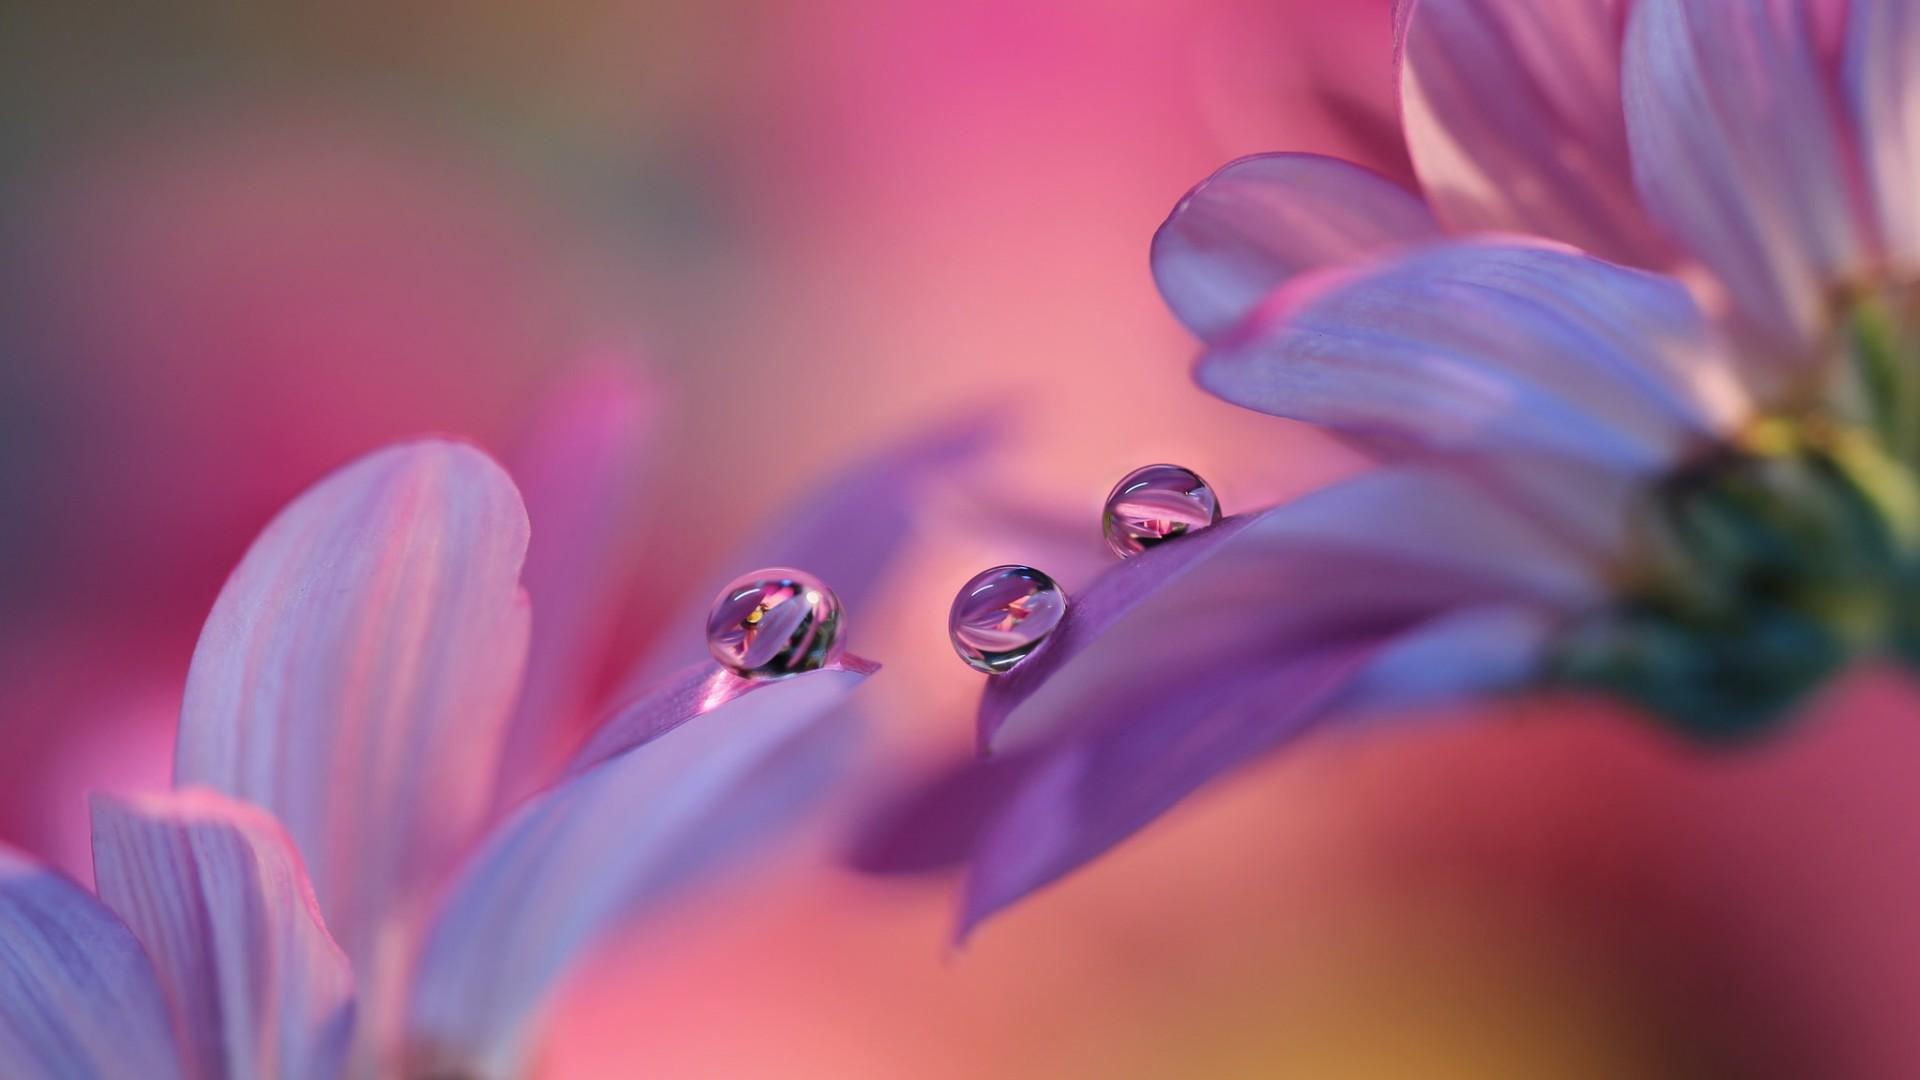 Dew Drops On The Flower - Macro Photography Wallpaper | Wallpaper ...